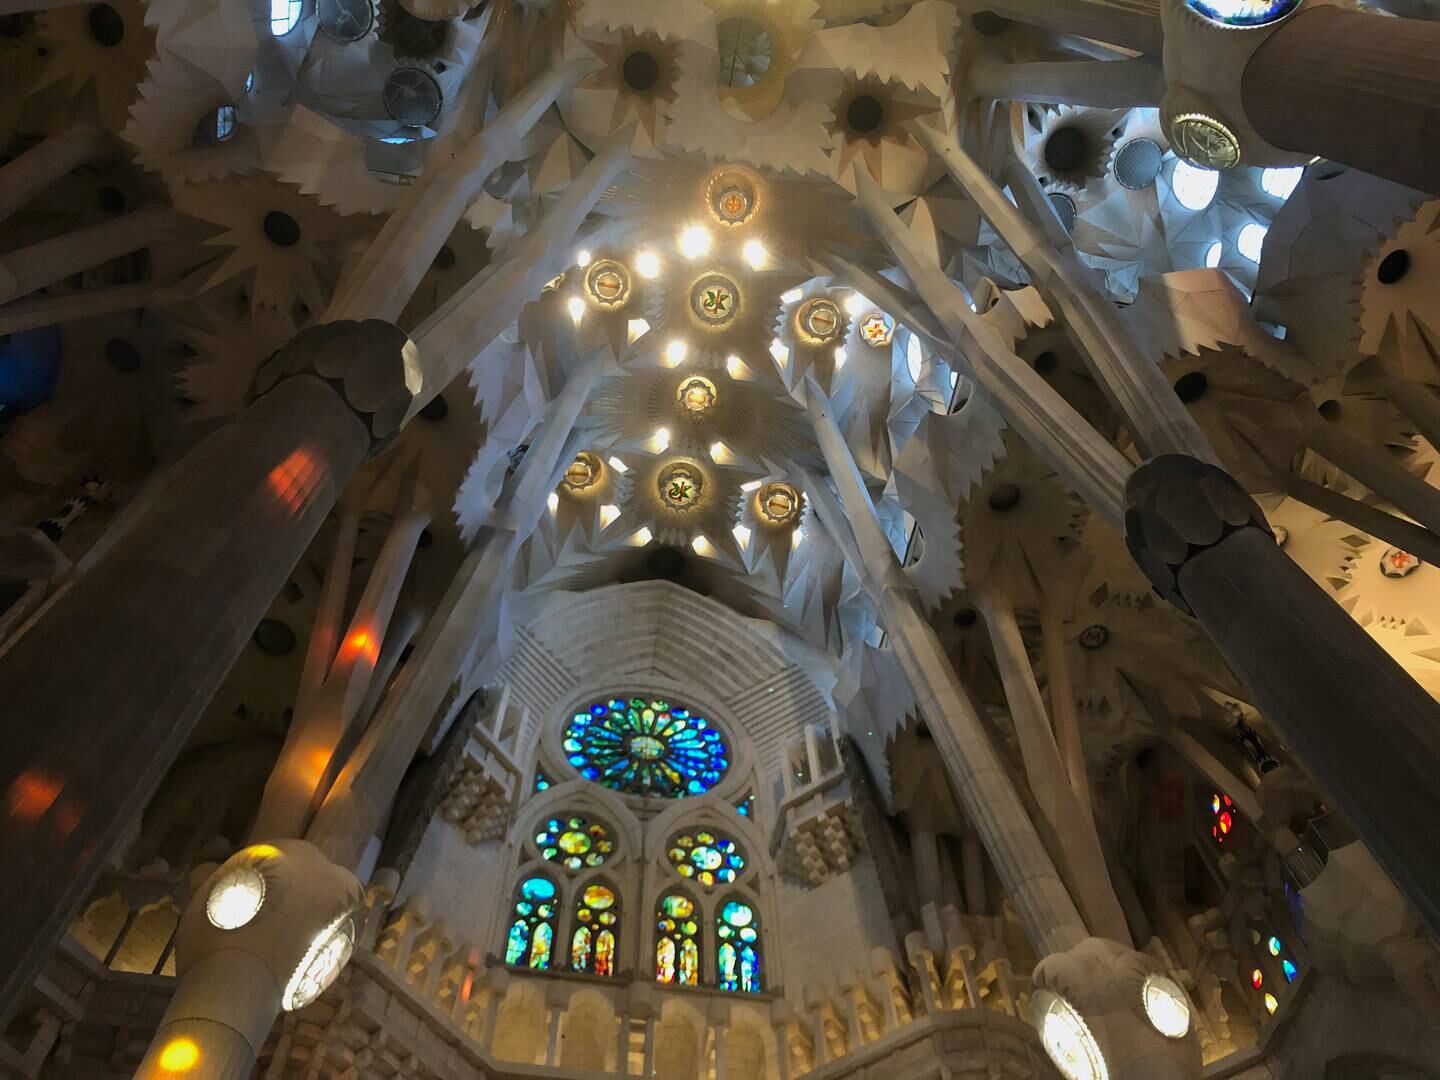 Resereportage från Barcelona. Sagrada